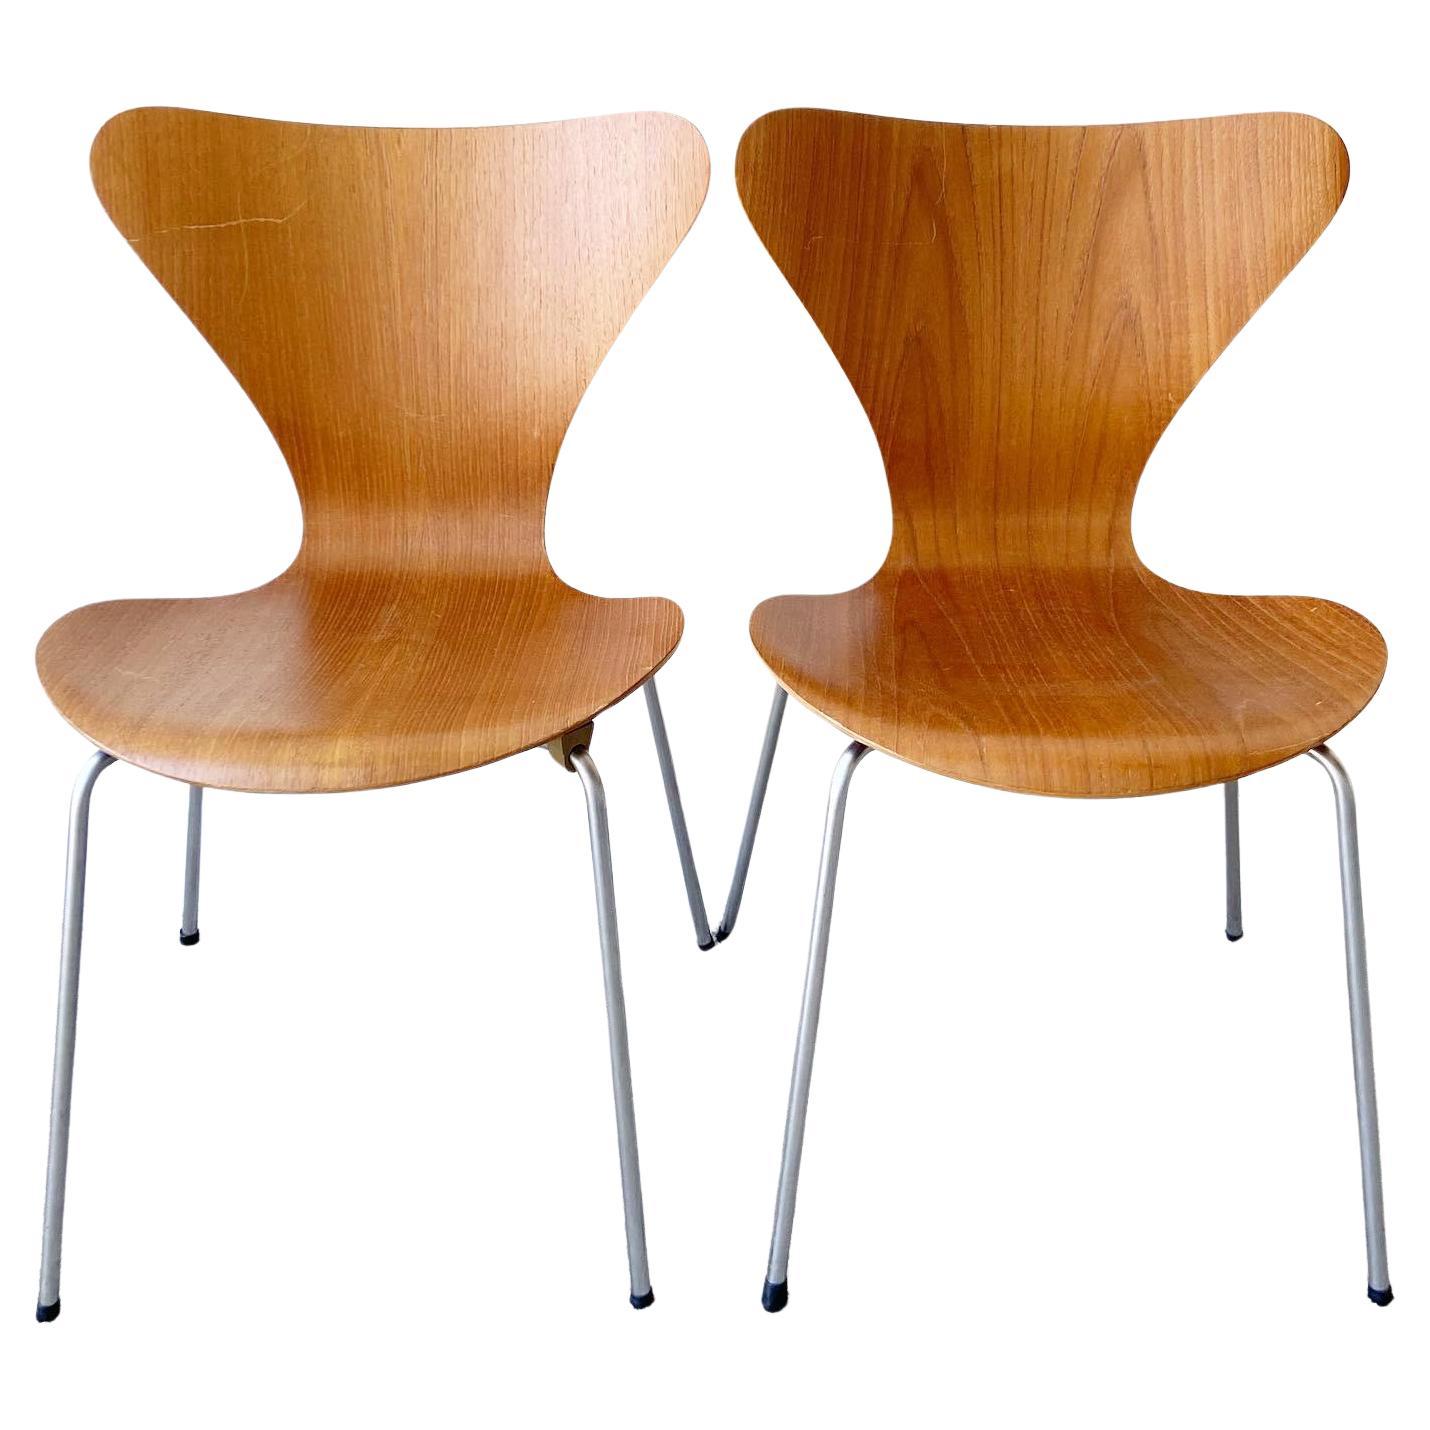 4 Mid Century Modern Arne Jacobsen for Fritz Hansen style Danish Bentwood Chairs